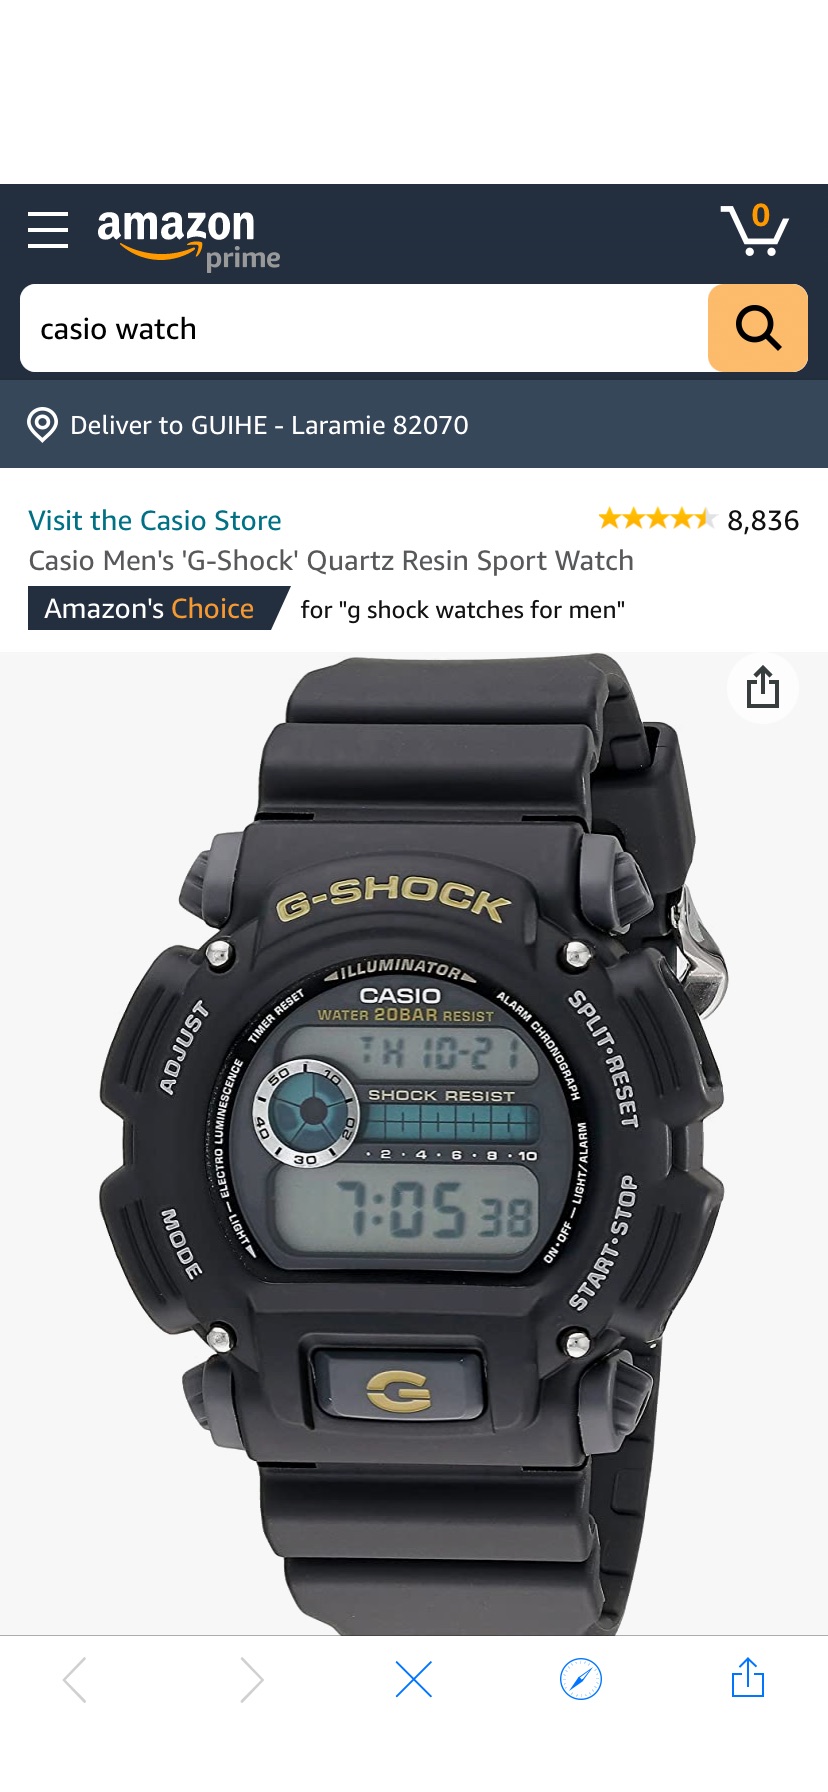 卡西欧男士G-shock手表
Amazon.com: Casio Men's G-Shock DW9052-1BCG Black Resin Sport Watch: Casio: Watches